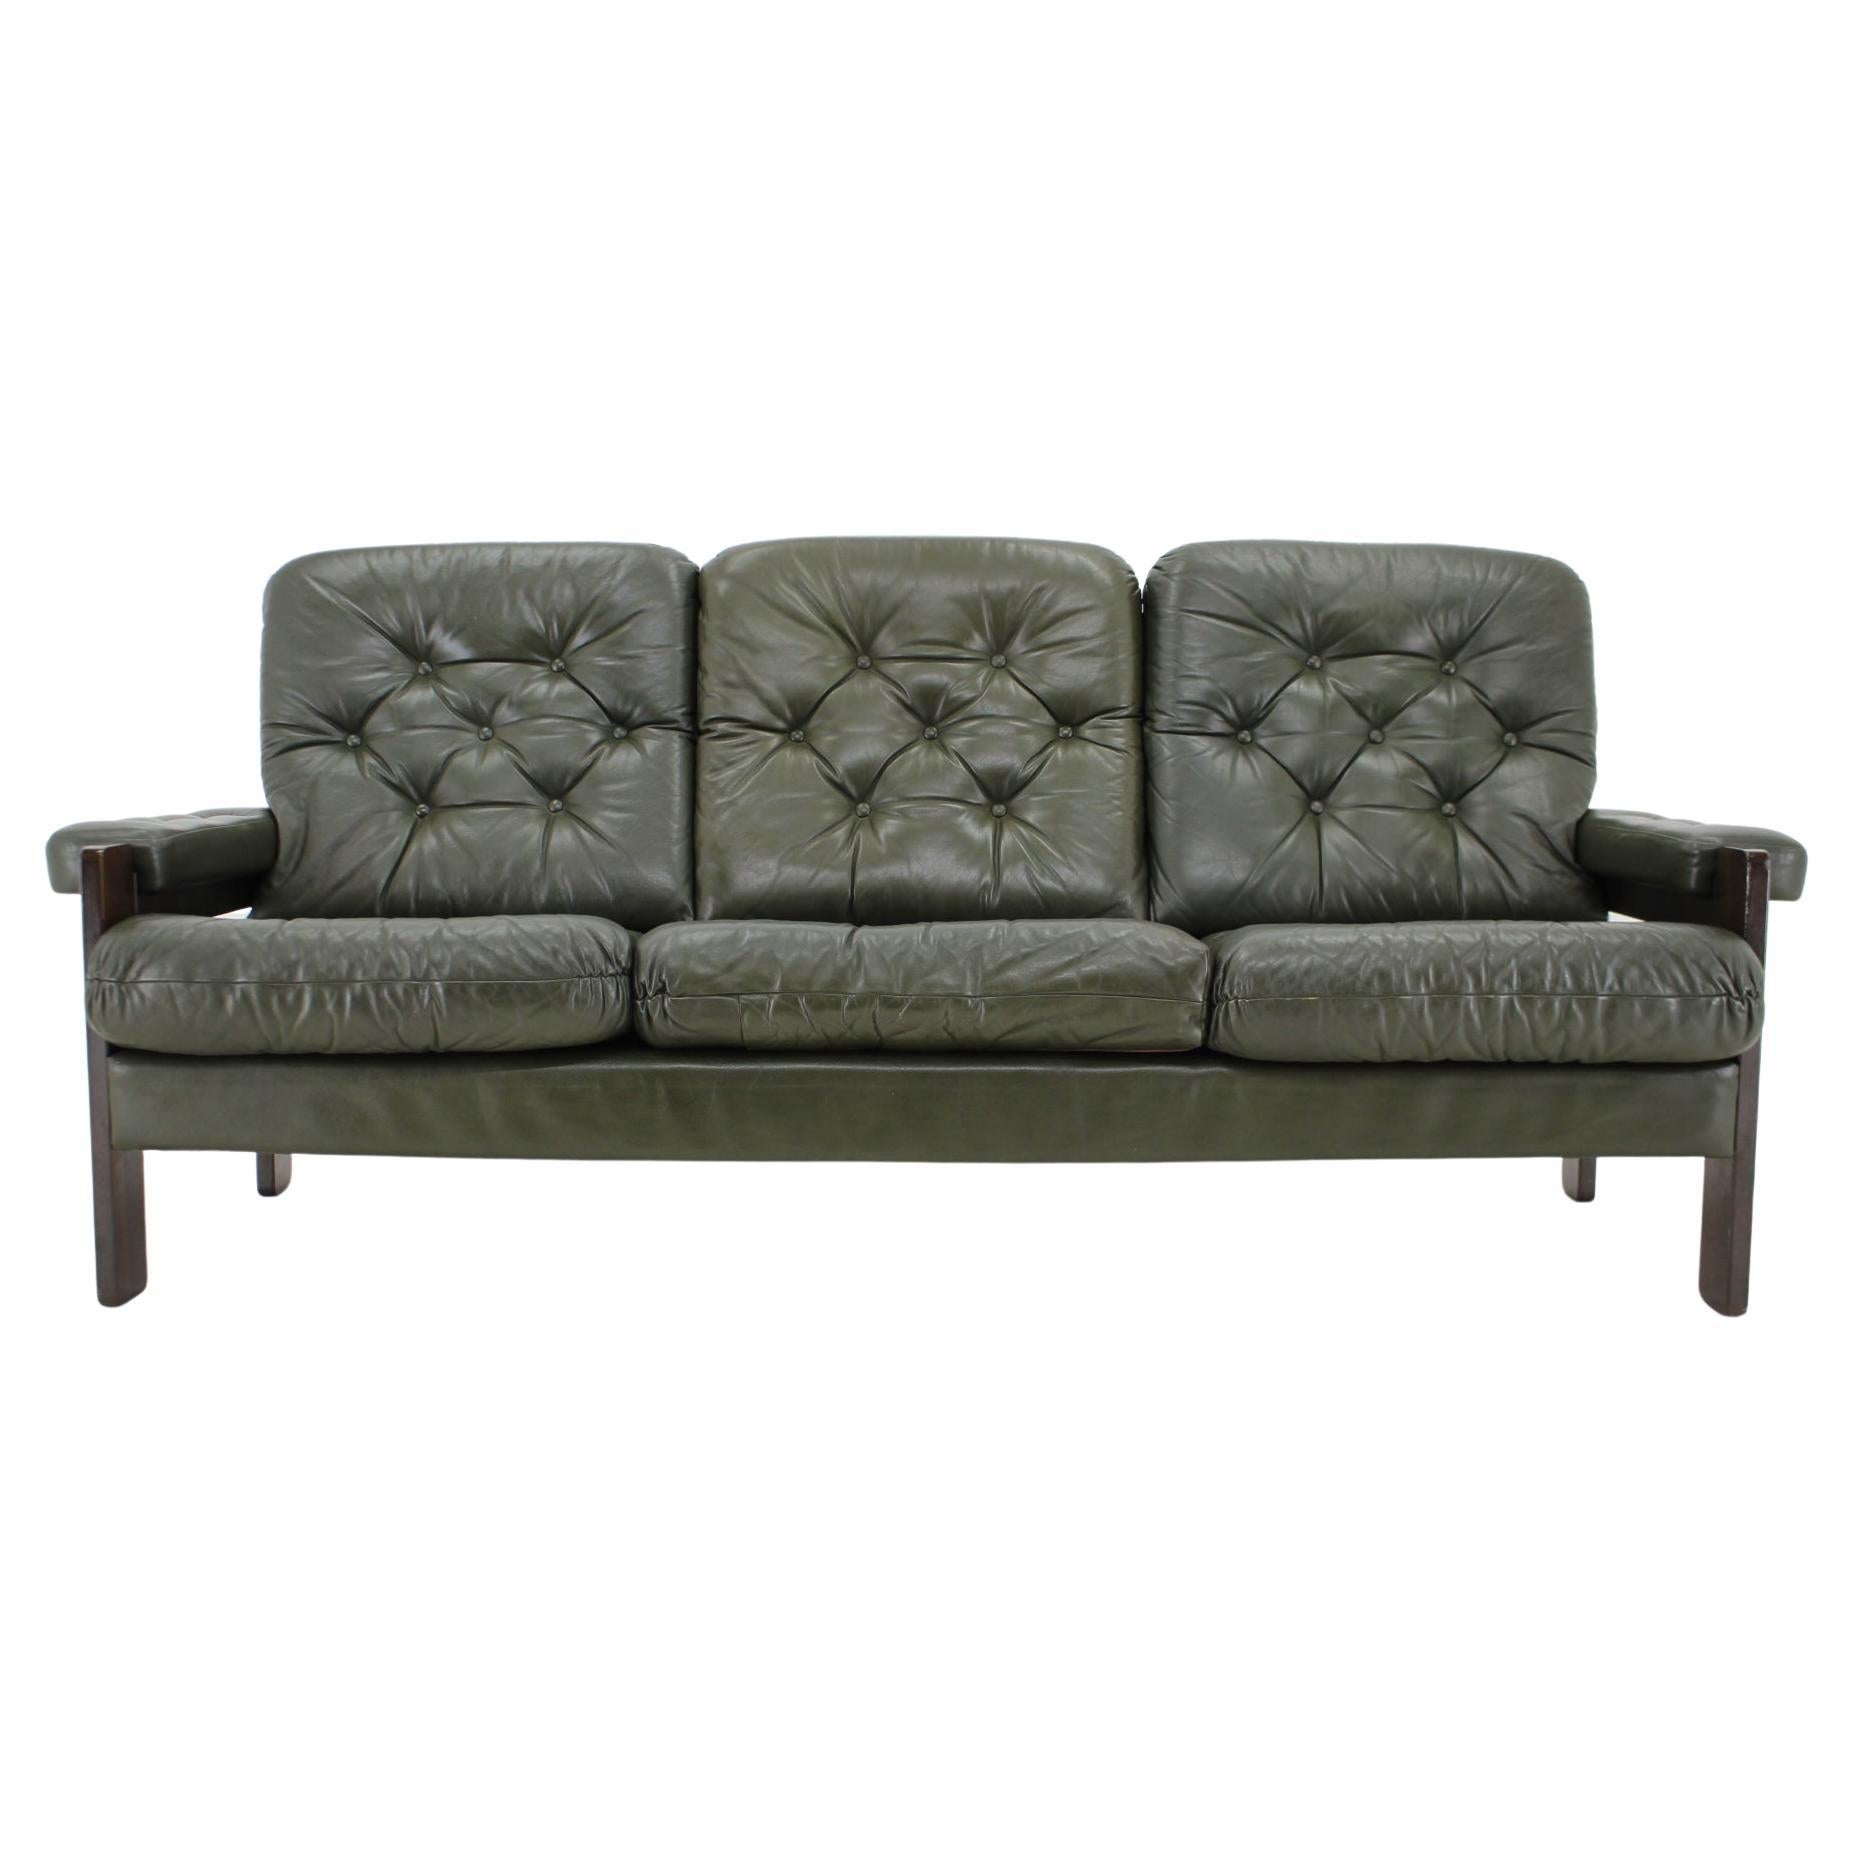 1970s Set of Dark Green Leather 3-Seater Sofa, Denmark